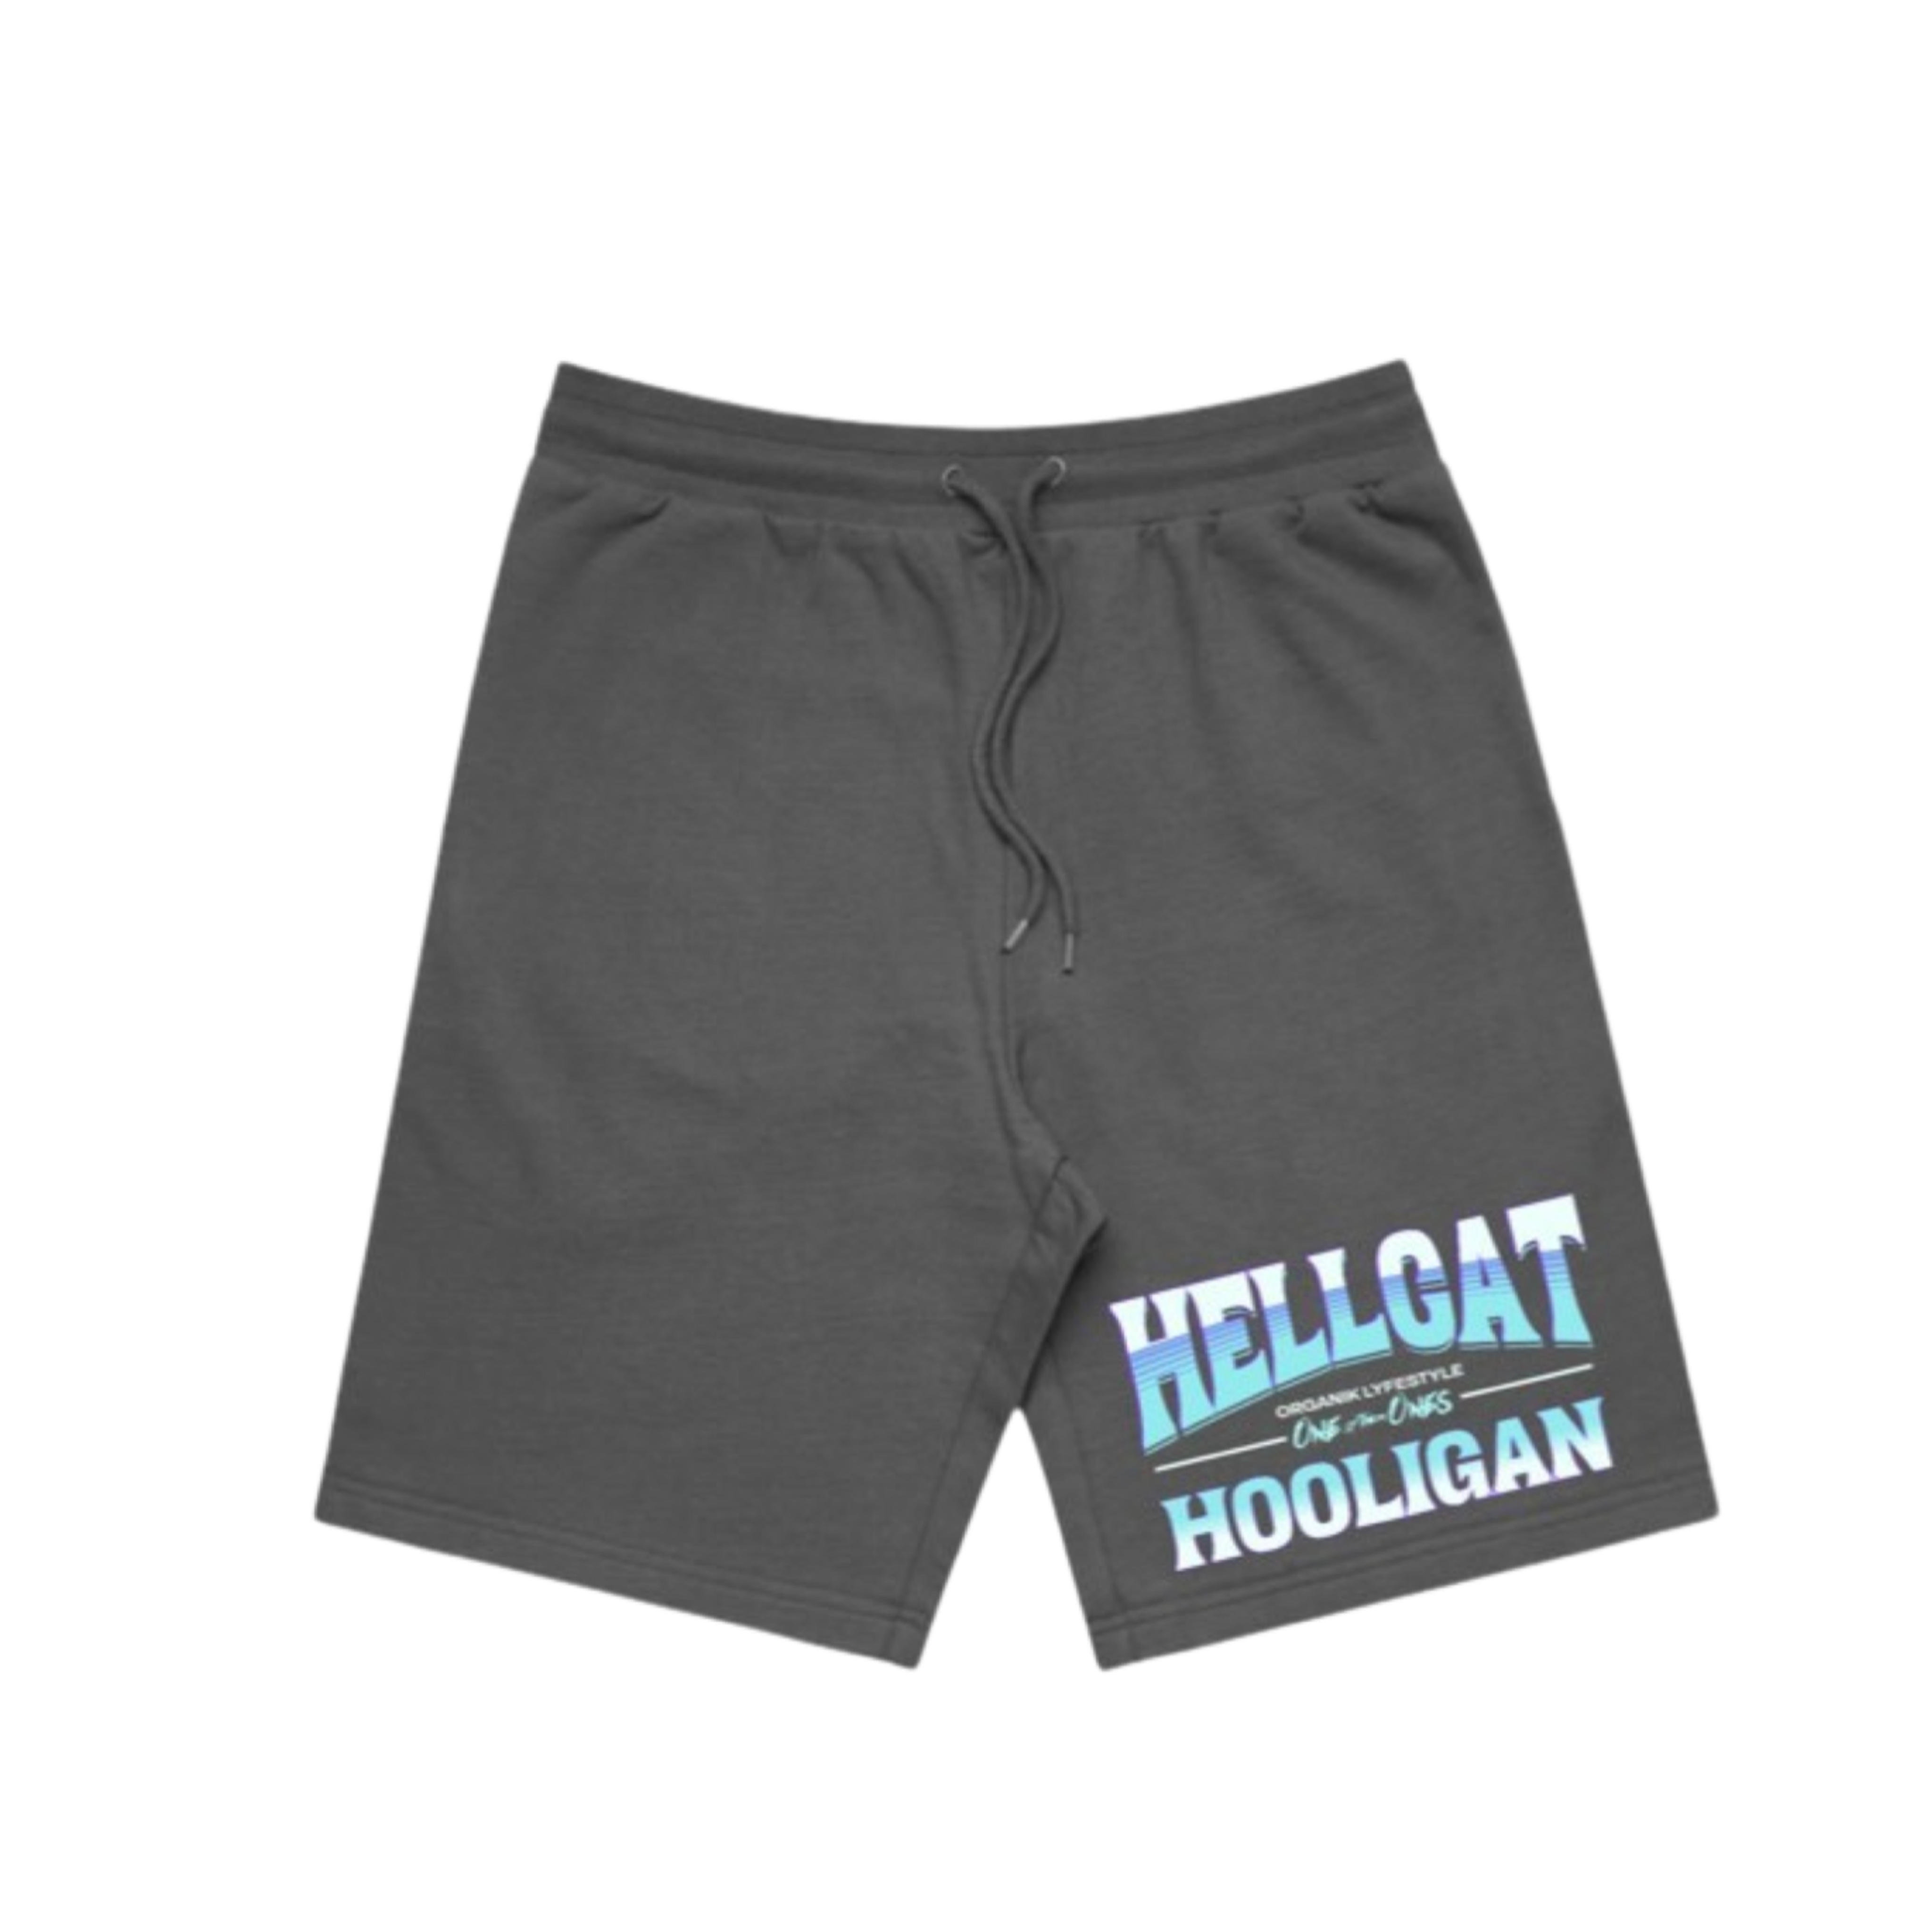 Organik Lyfestyle - Hellcat Hooligan Shorts - Grey & Blue